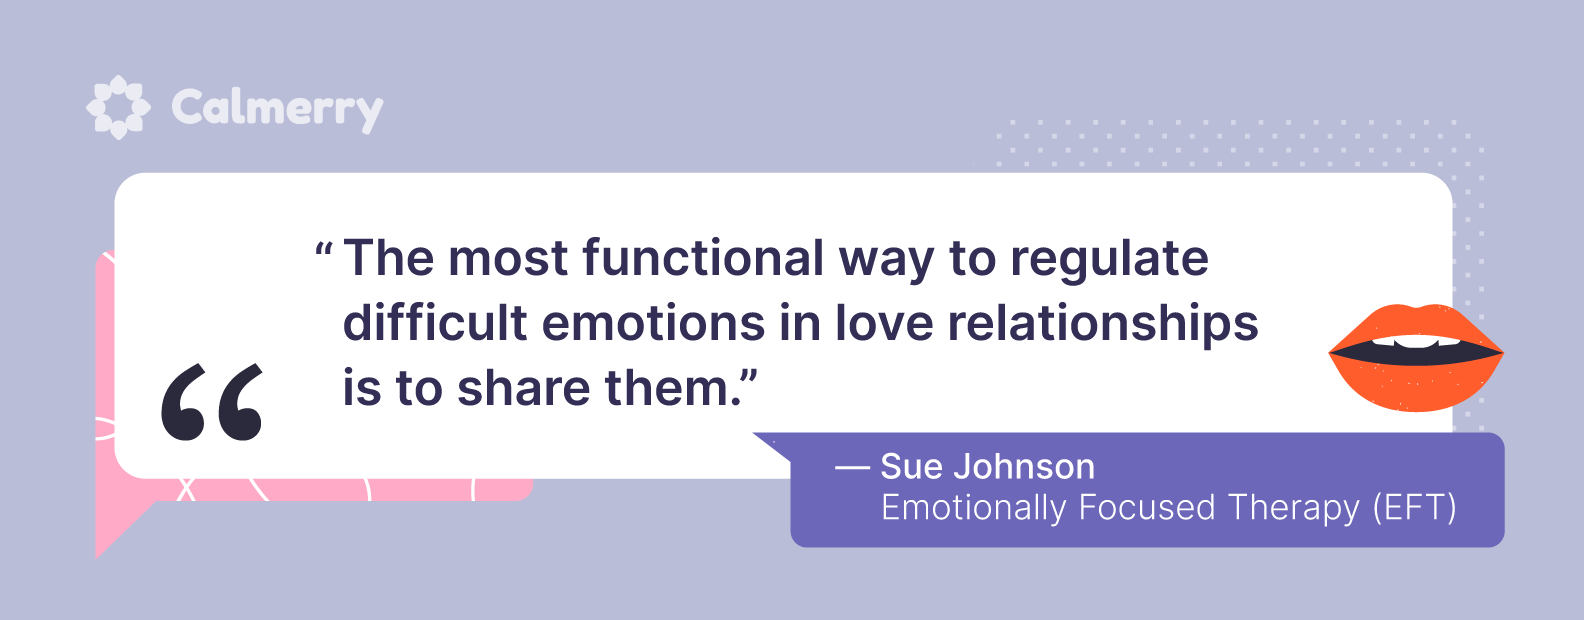 Sue Johnson, Emotionally Focused Therapy